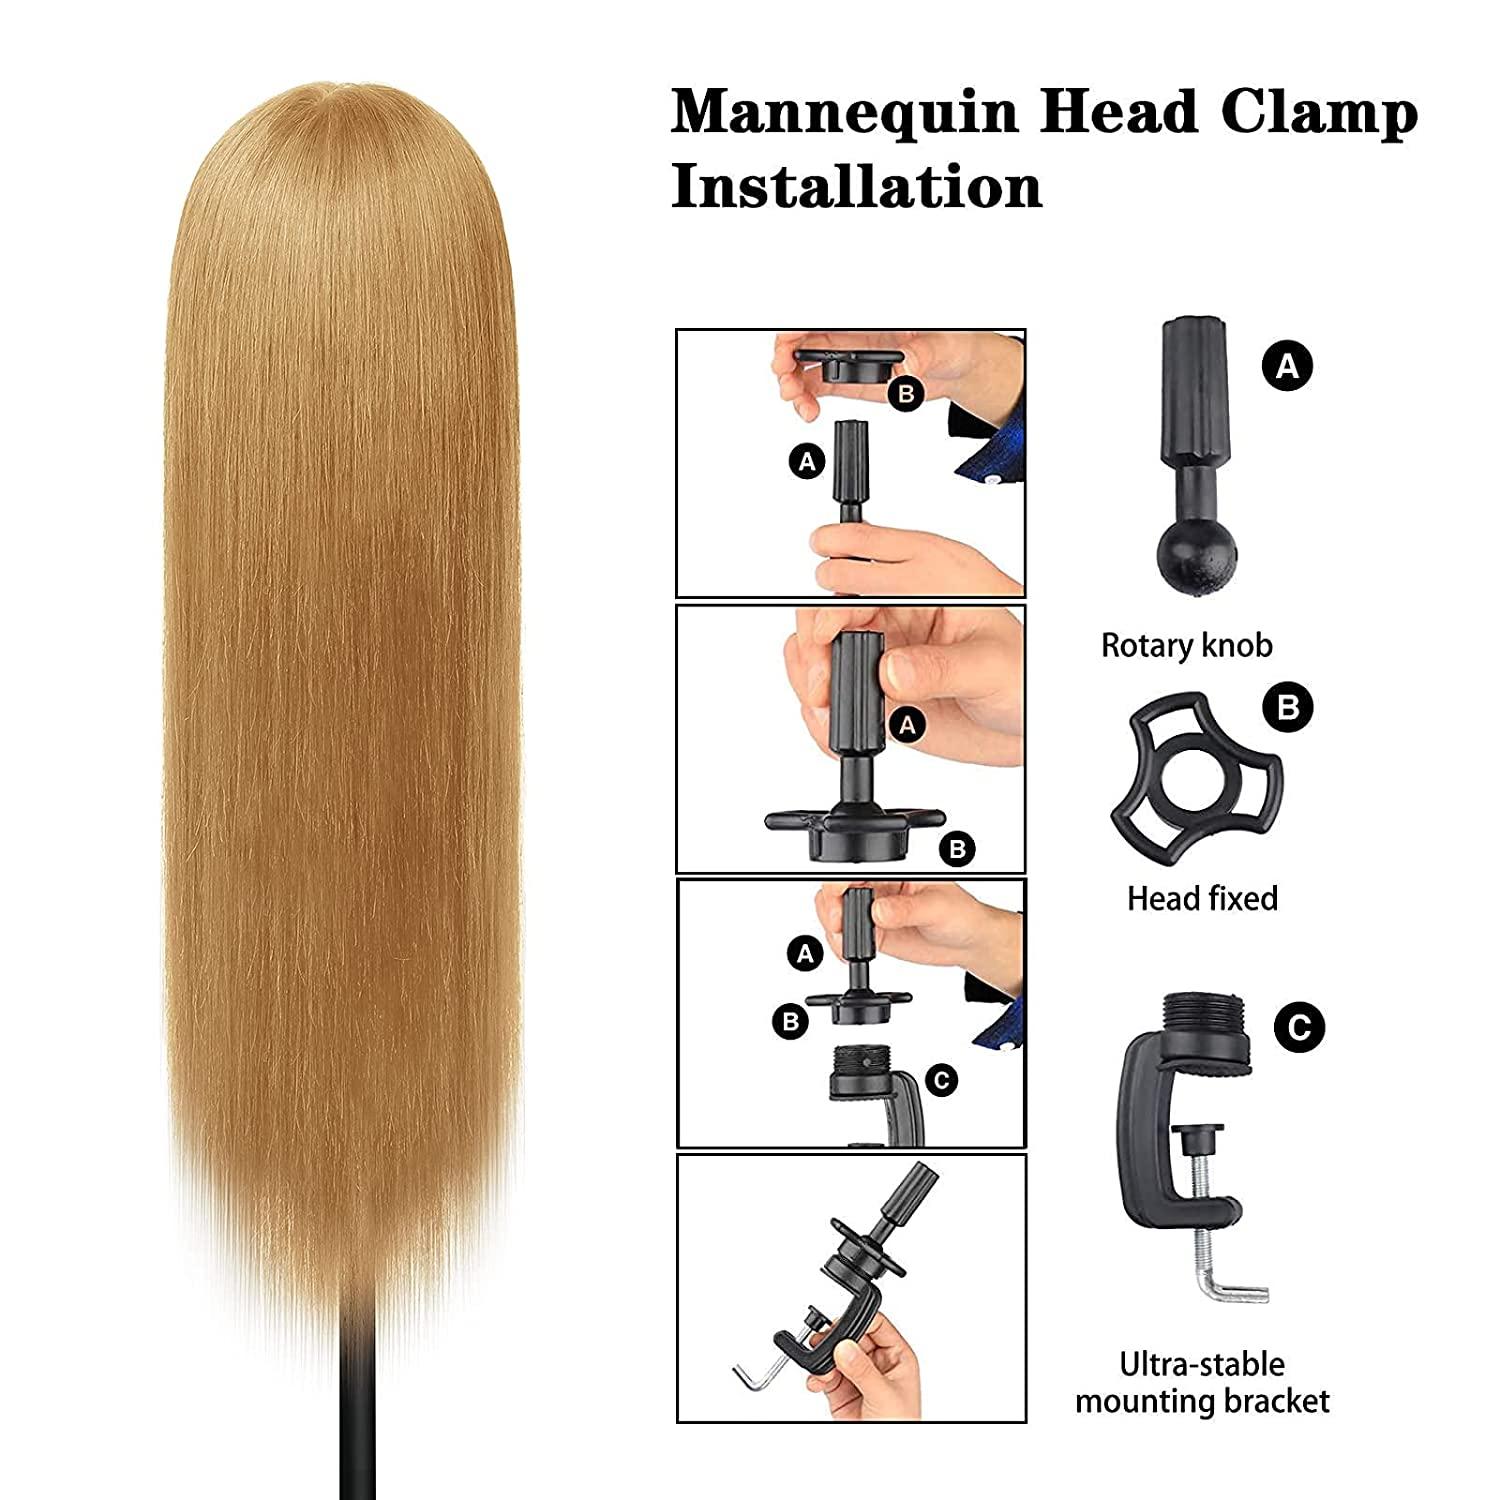 LNASI Mannequin Head 24-26 inch 100% human hair Styling Training